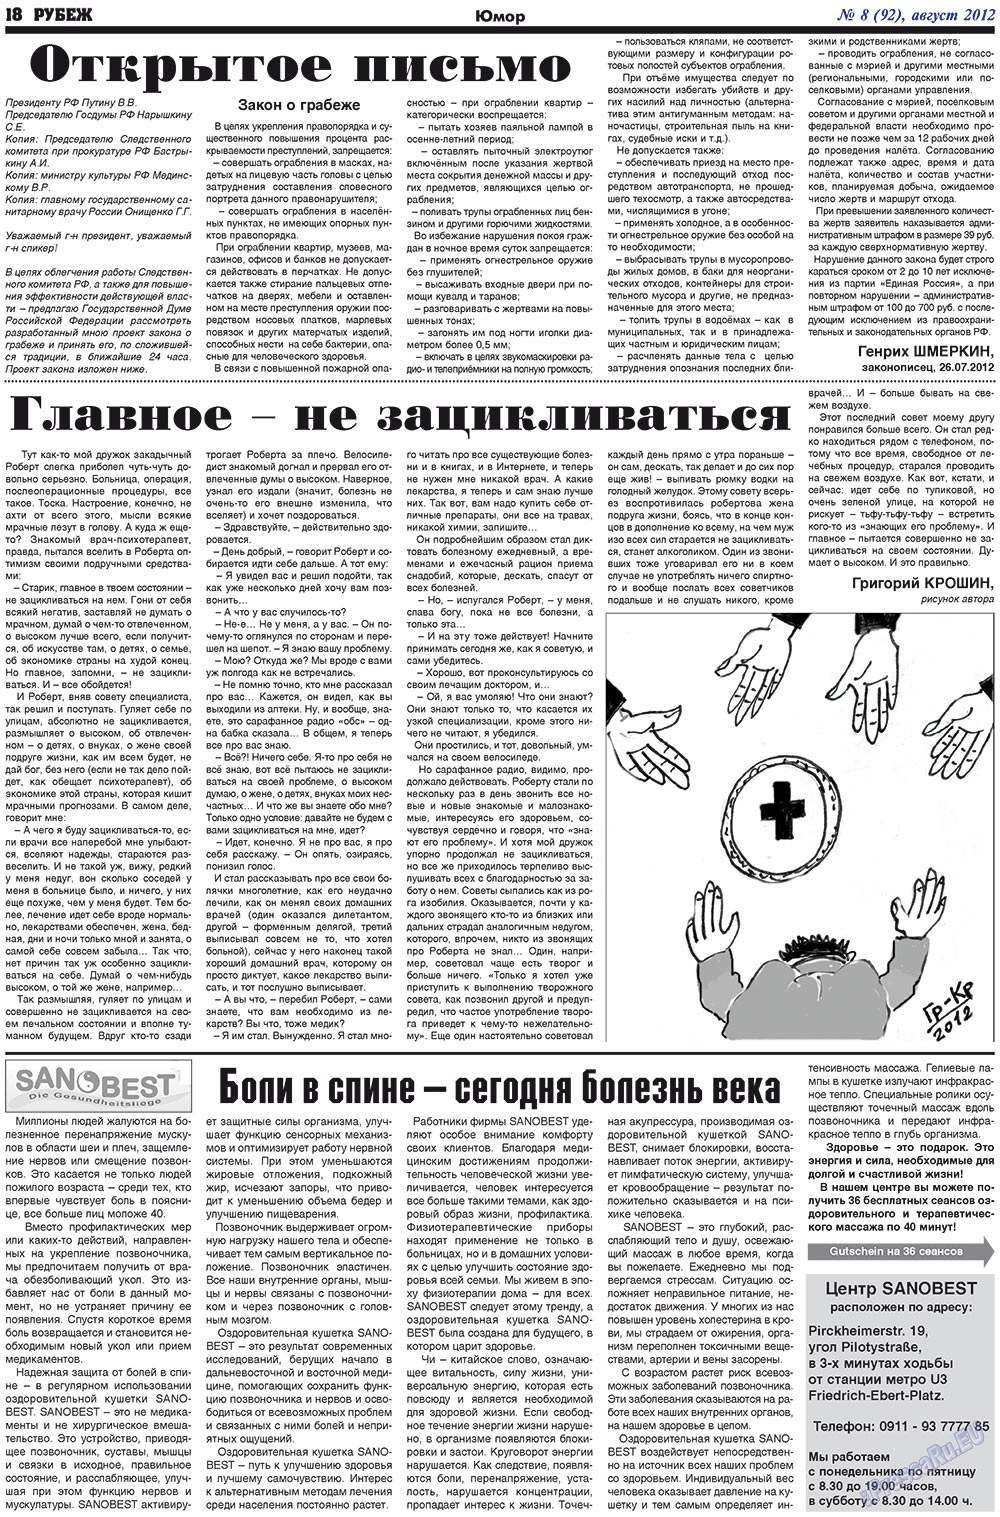 Рубеж, газета. 2012 №8 стр.18